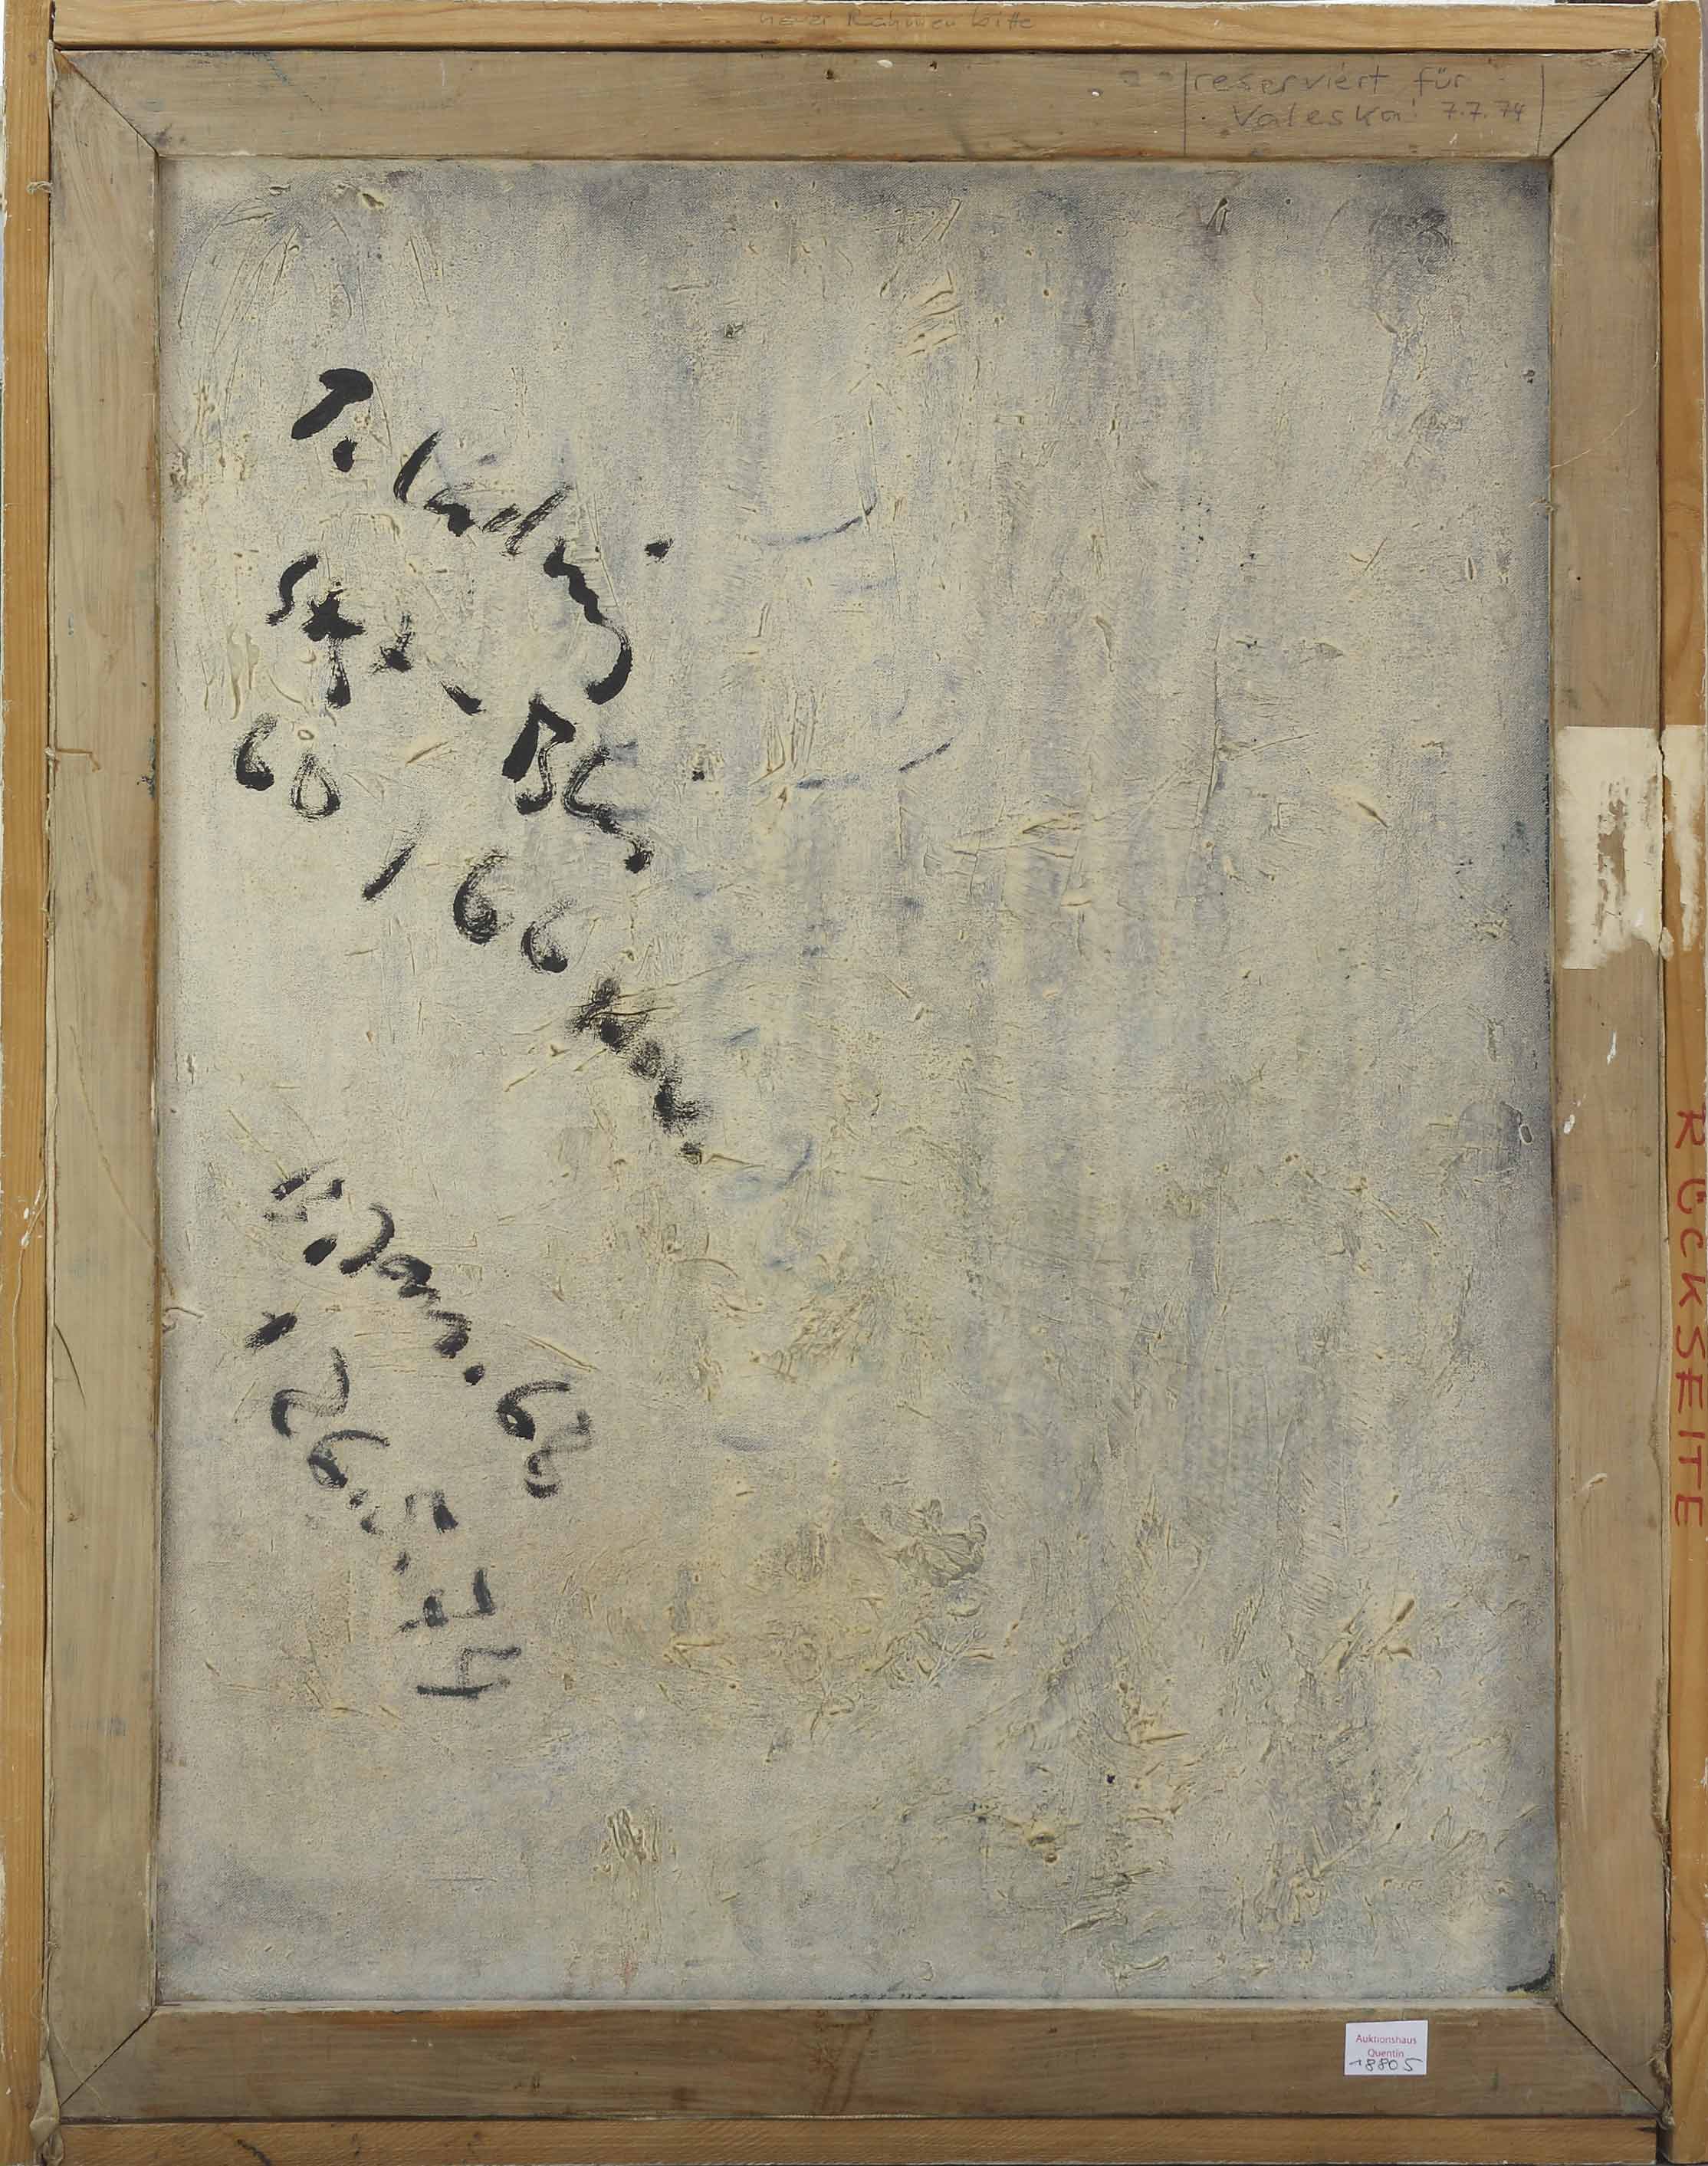 Auktionshaus Quentin Berlin Ladwig  Roland (1935 Wedel - 2014 Berlin) Selbstbildnis. 1974. Ãl auf Leinwand. 85 x 67 cm. Links unten signiert und datiert sowie rÃ¼ckseitig si